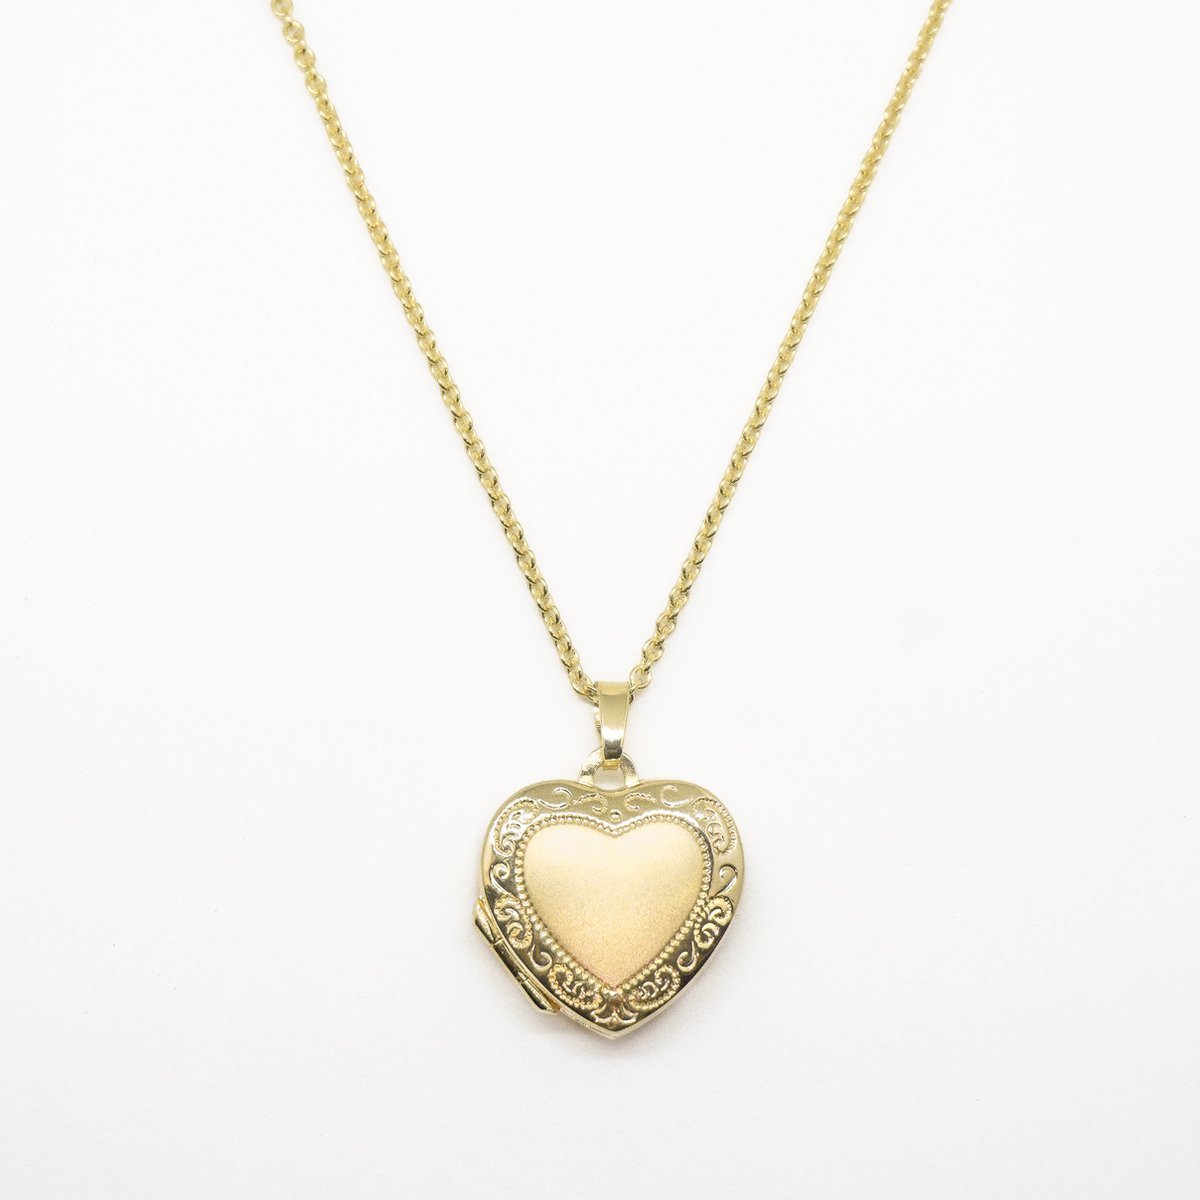 Heart Locket – 18K Goud Verguld 925 Zilver – Medaillon Hart Ketting – Foto Medaillon – Valentijn Cadeautje Vrouwen – Moederdag Cadeau